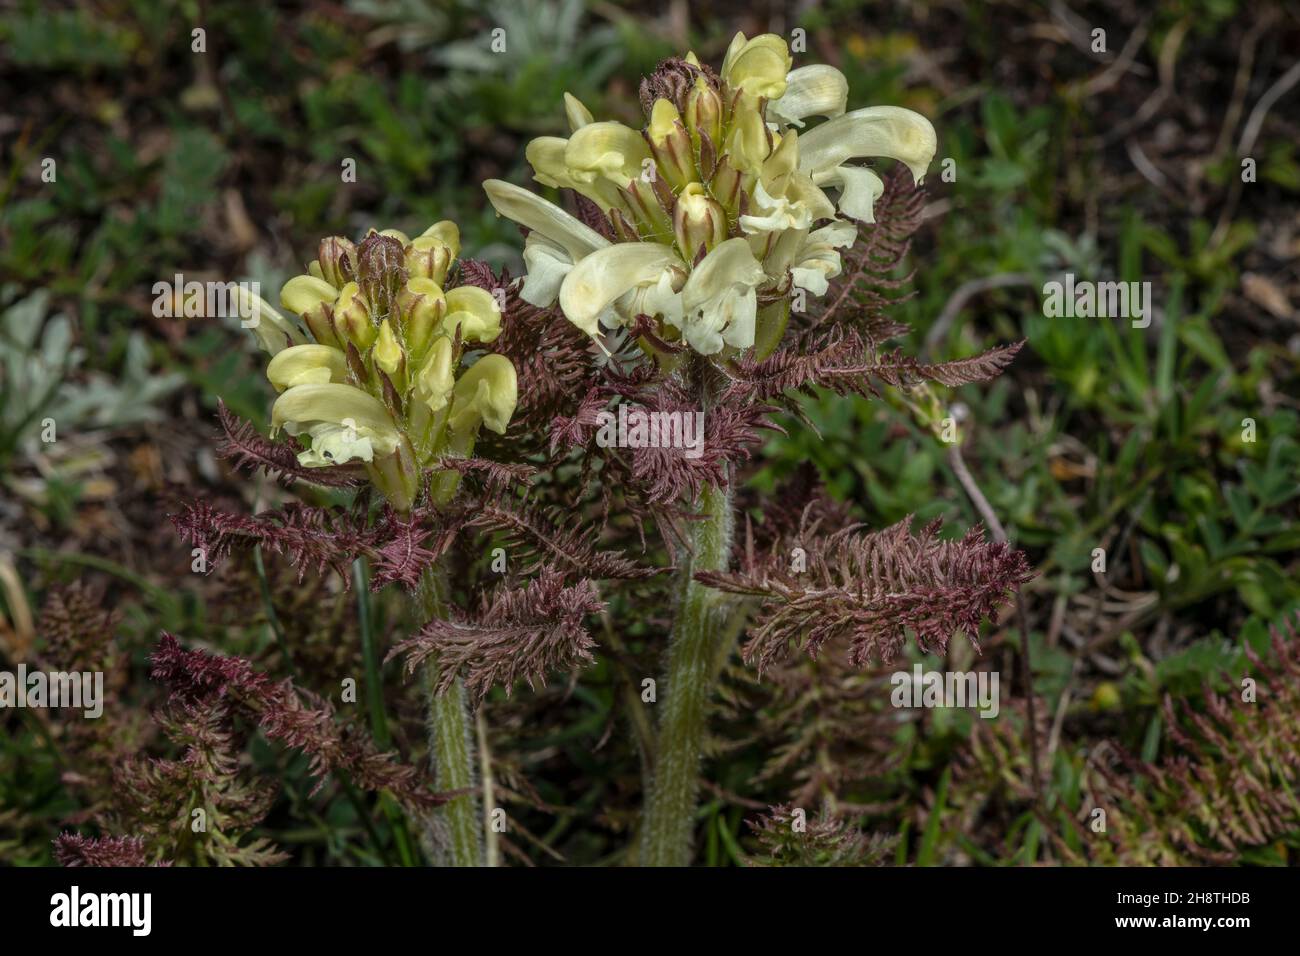 Leafy Lousewort, Pedicularis foliosa, in flower in damp alpine grassland. French Alps. Stock Photo